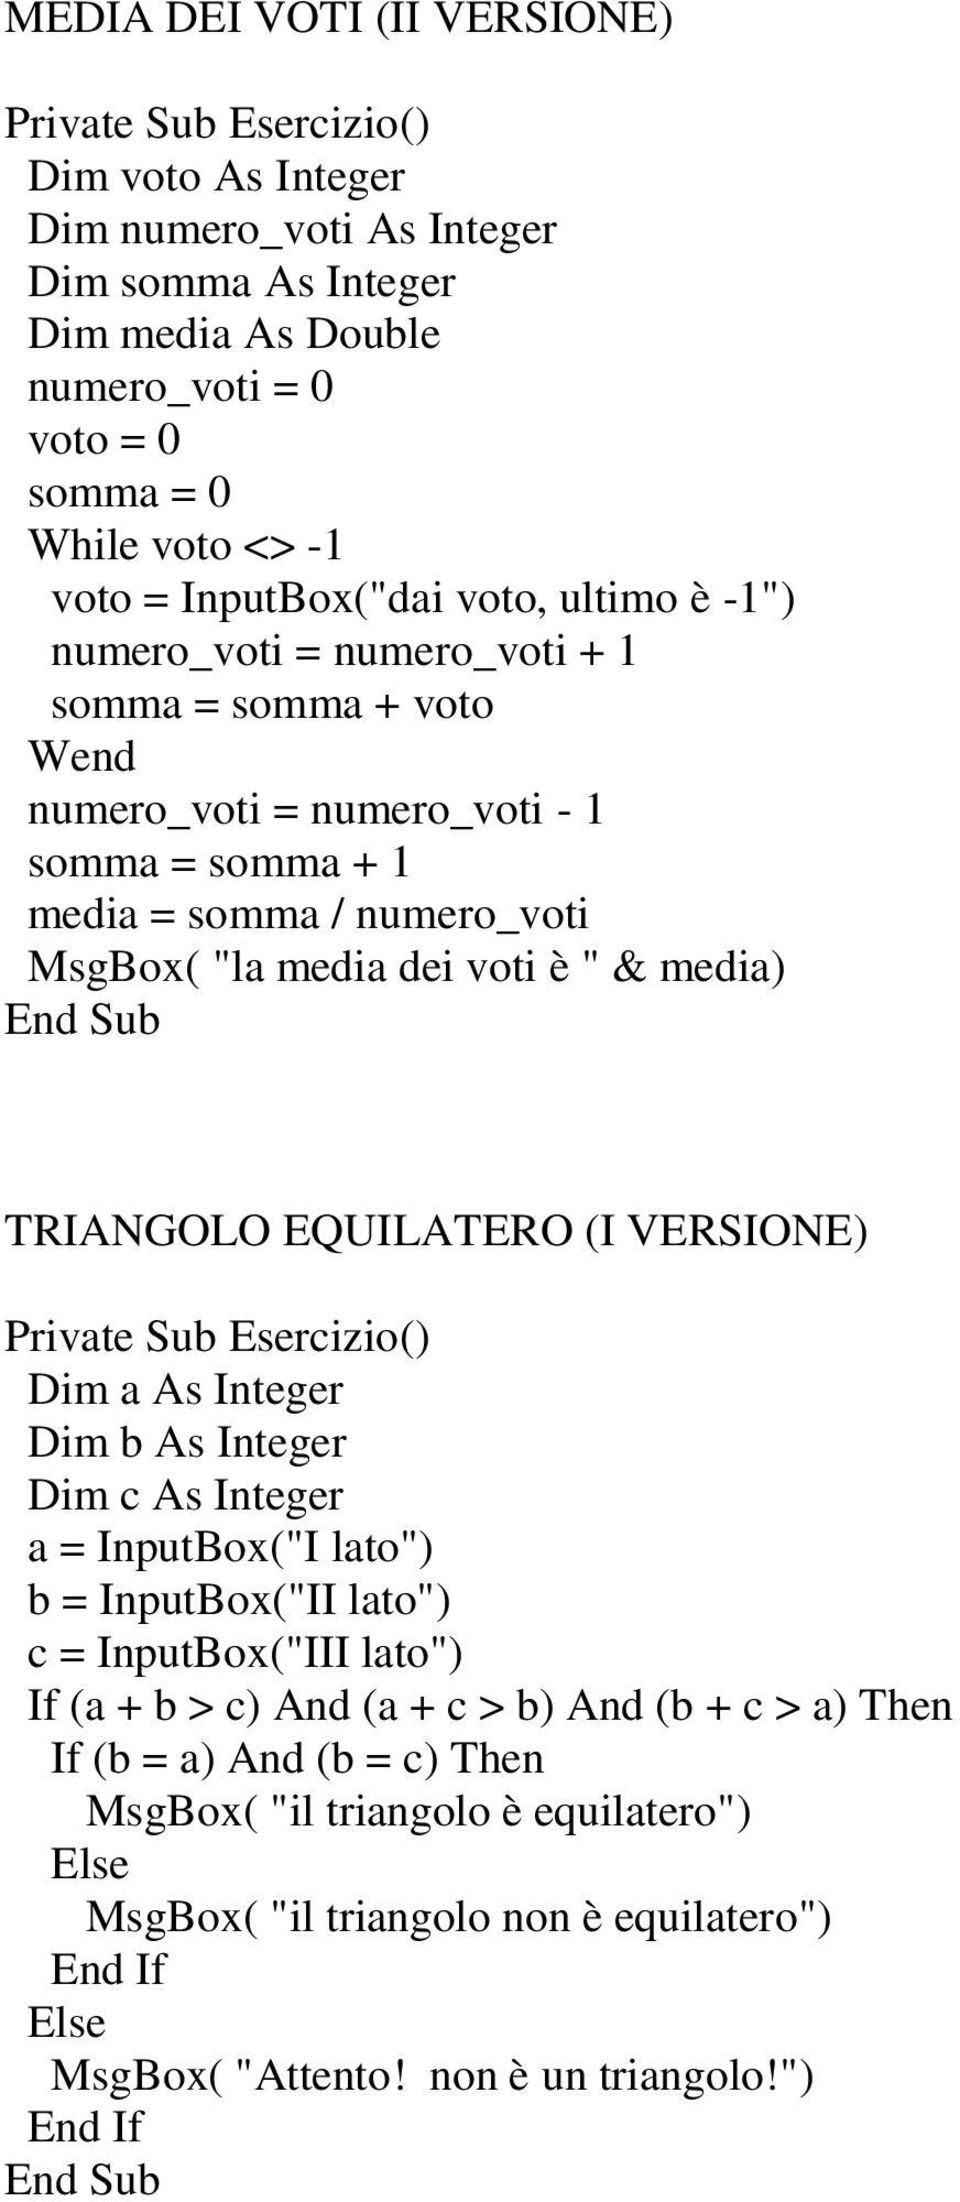 media) TRIANGOLO EQUILATERO (I VERSIONE) Dim a As Integer Dim c As Integer a = InputBox("I lato") b = InputBox("II lato") c = InputBox("III lato") If (a + b > c) And